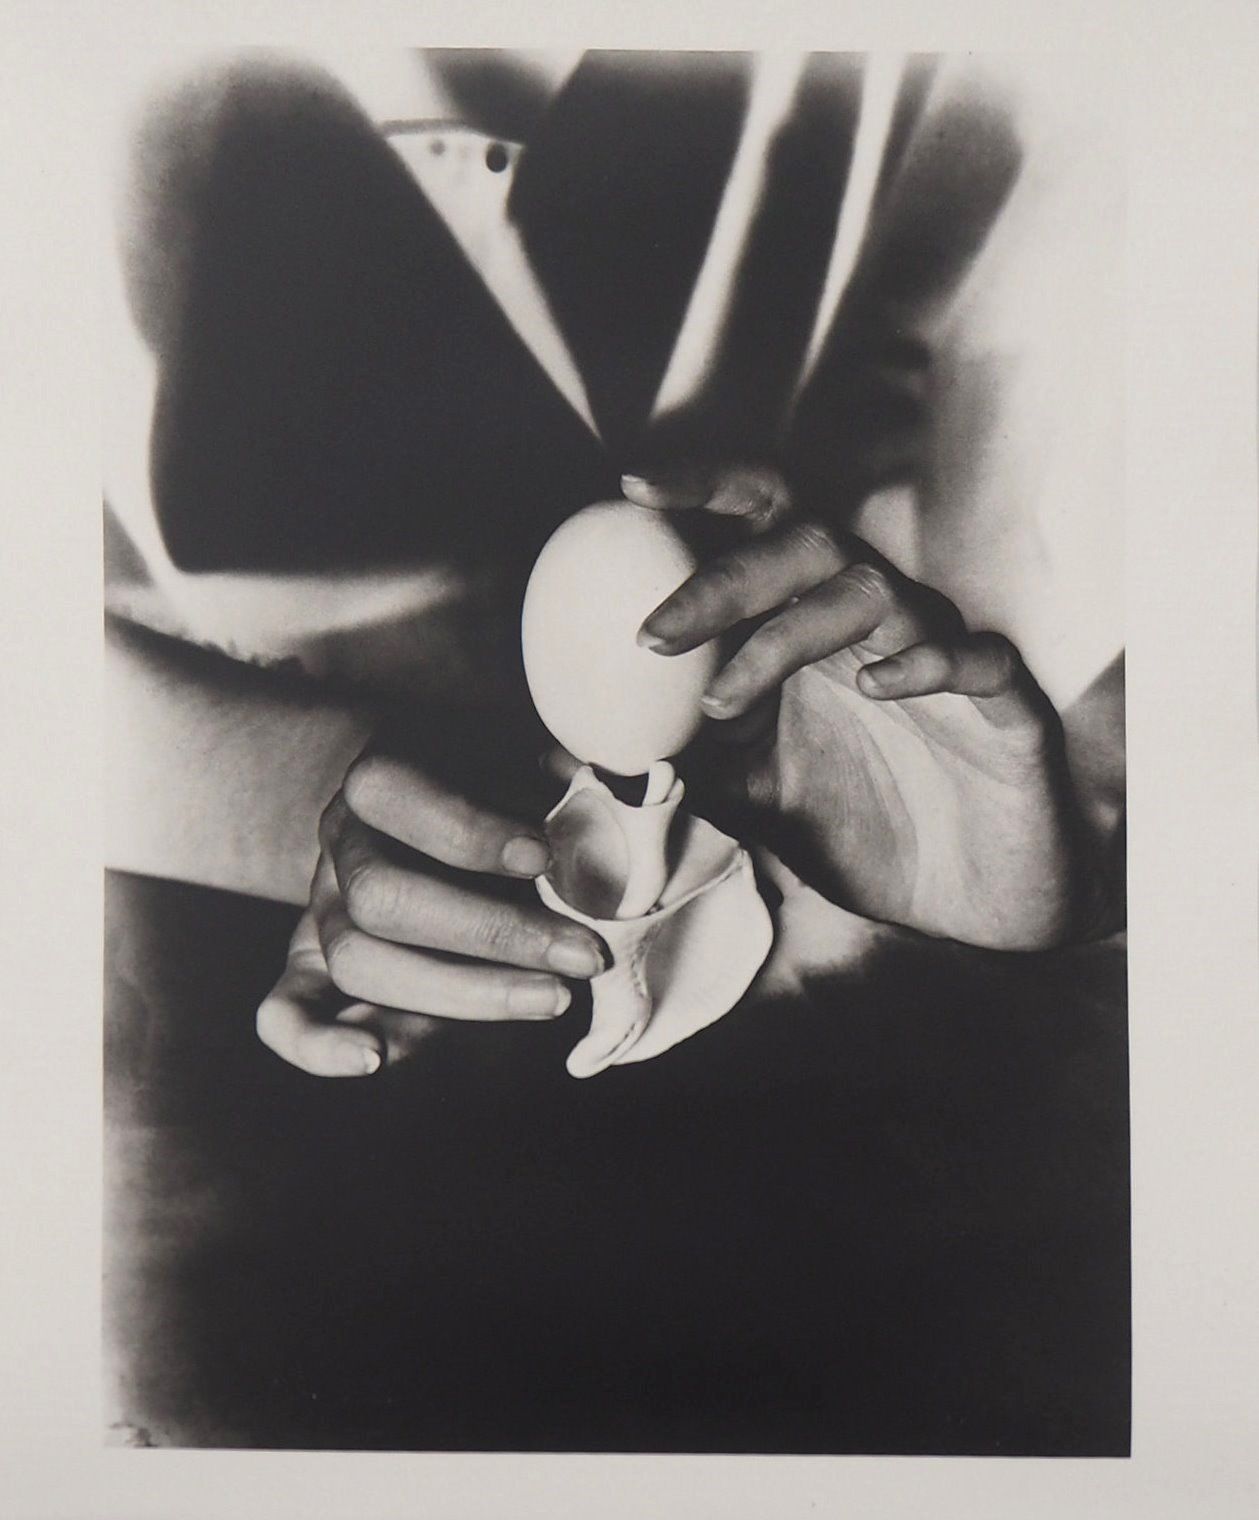 Man Ray 文瑞(1890-1976)

超现实主义的构成

后部银色印刷品

背面的邮票 ADAGP Man Ray Trust的版权，1991年

光面&hellip;